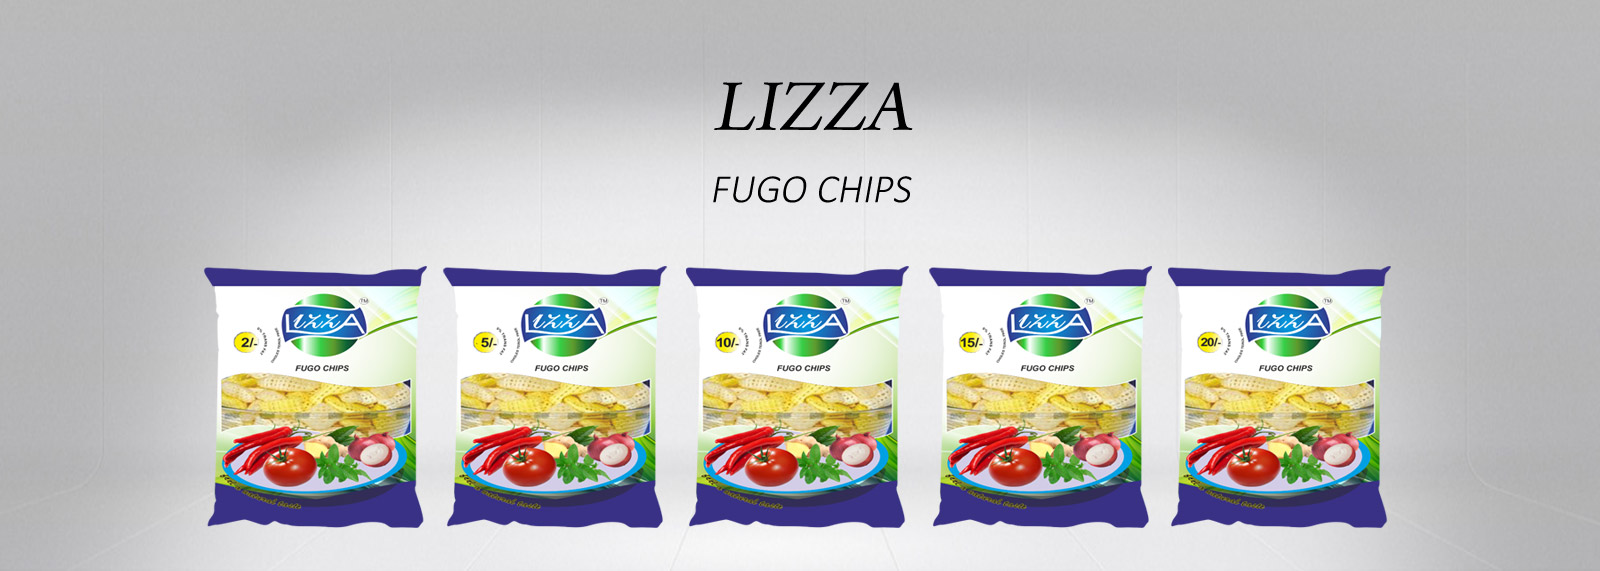 Lizza fugo chips 